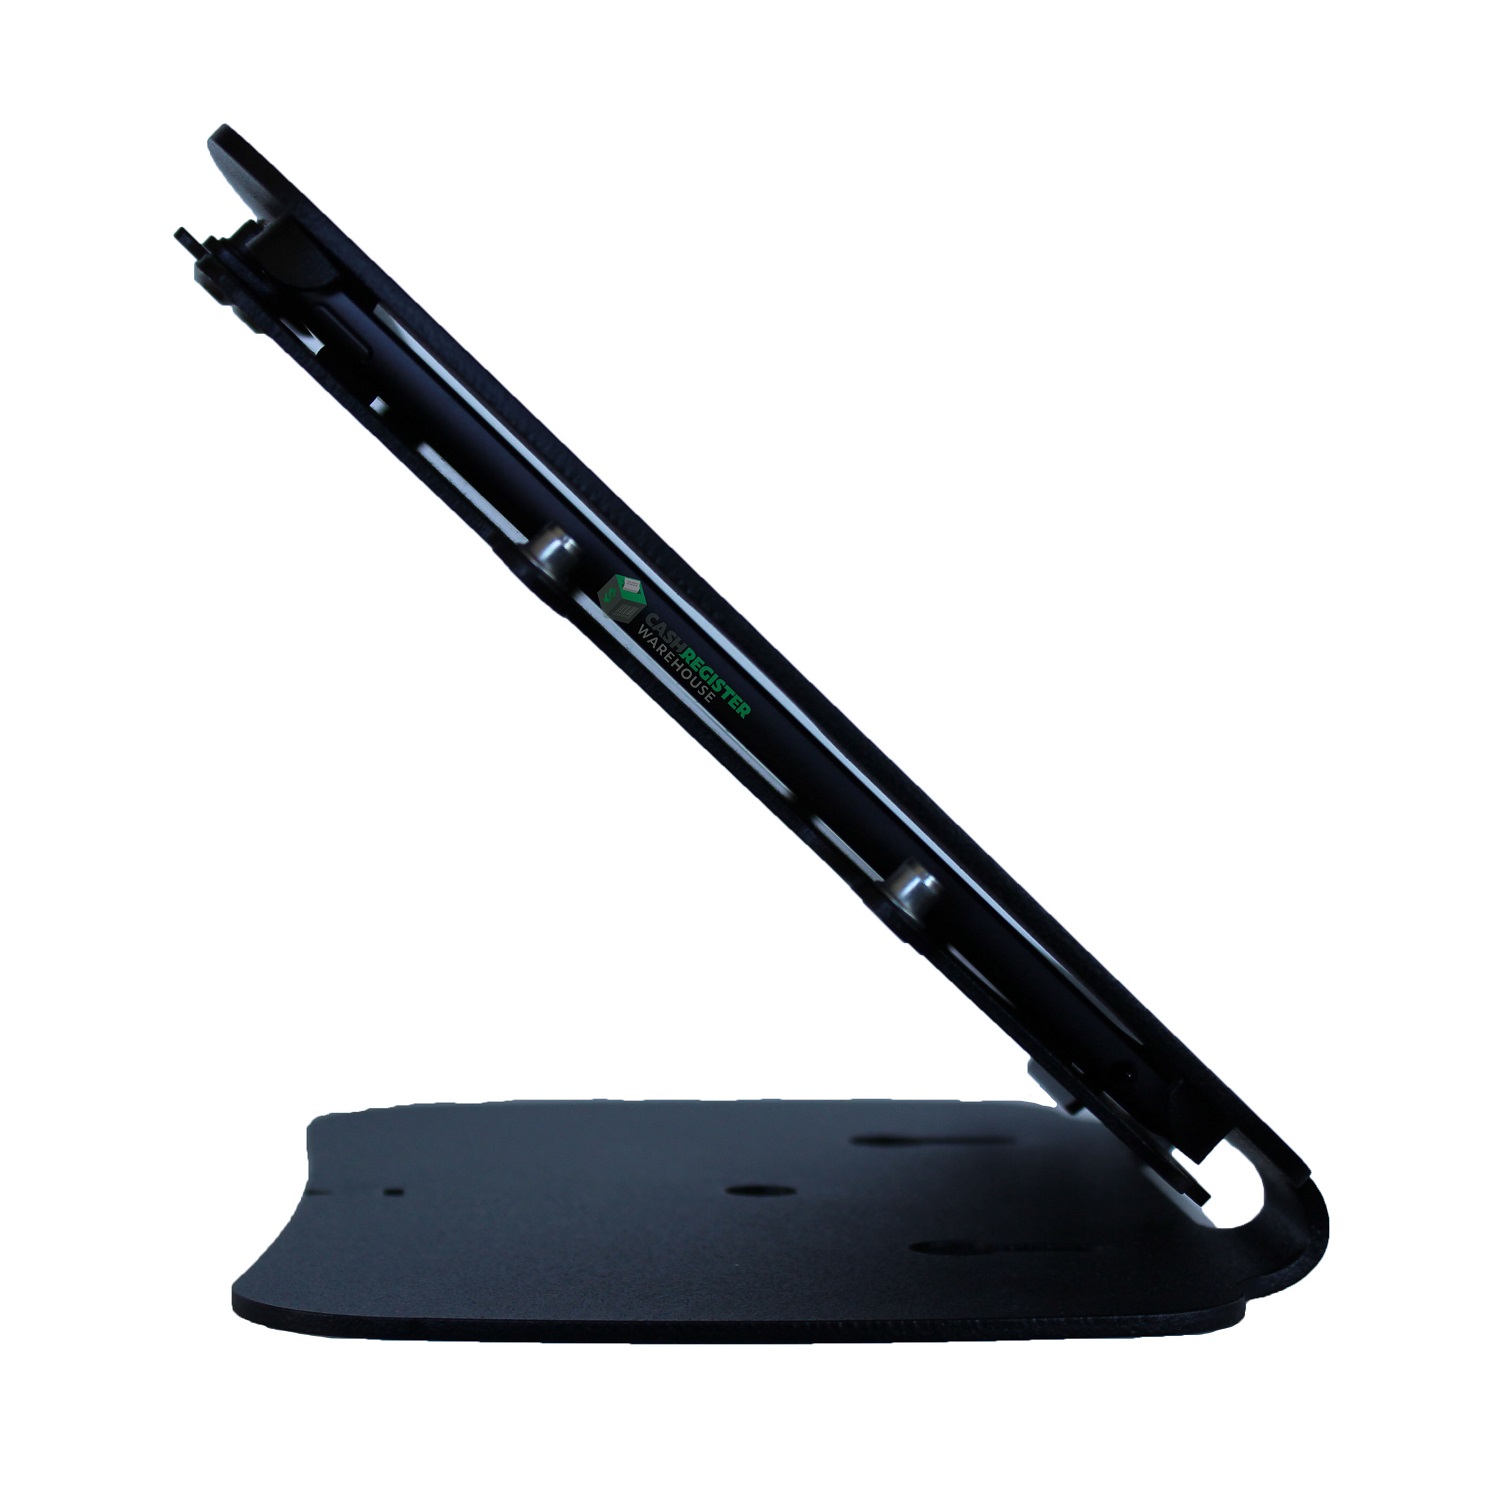 Simtek IS-200 iPad Stand Side